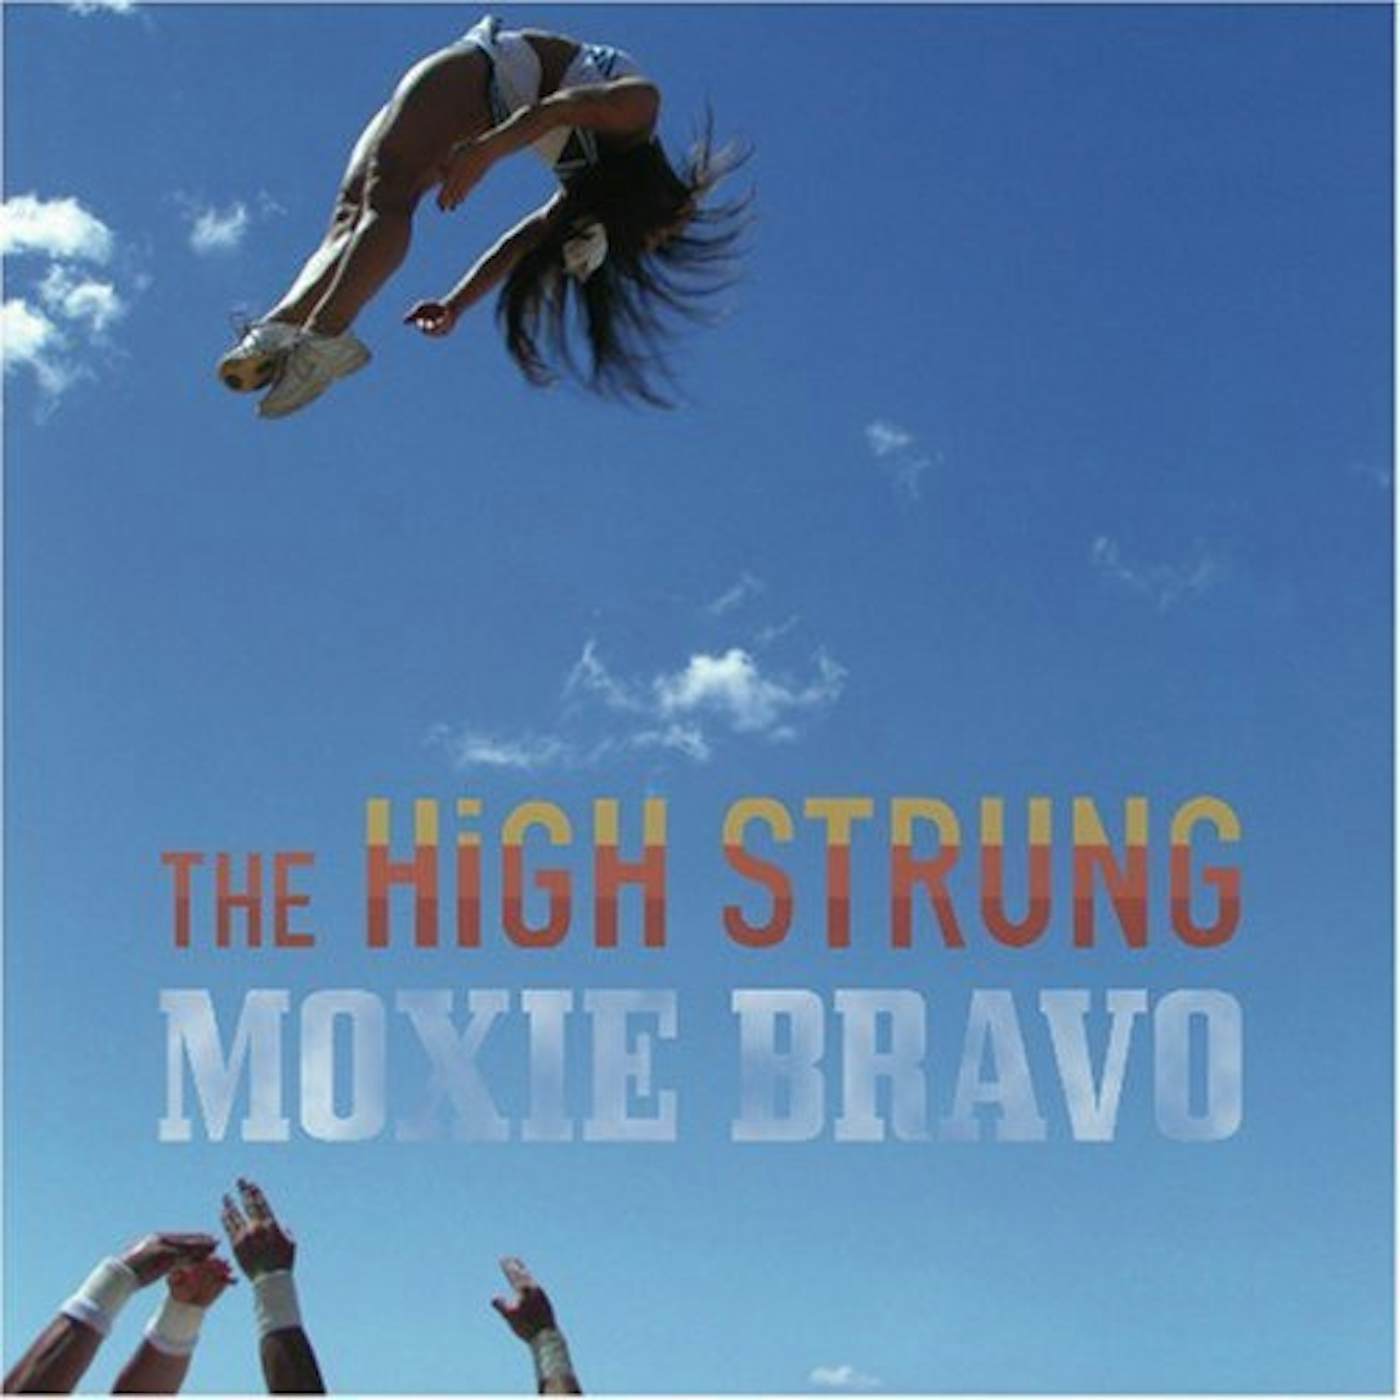 High Strung Moxie Bravo Vinyl Record